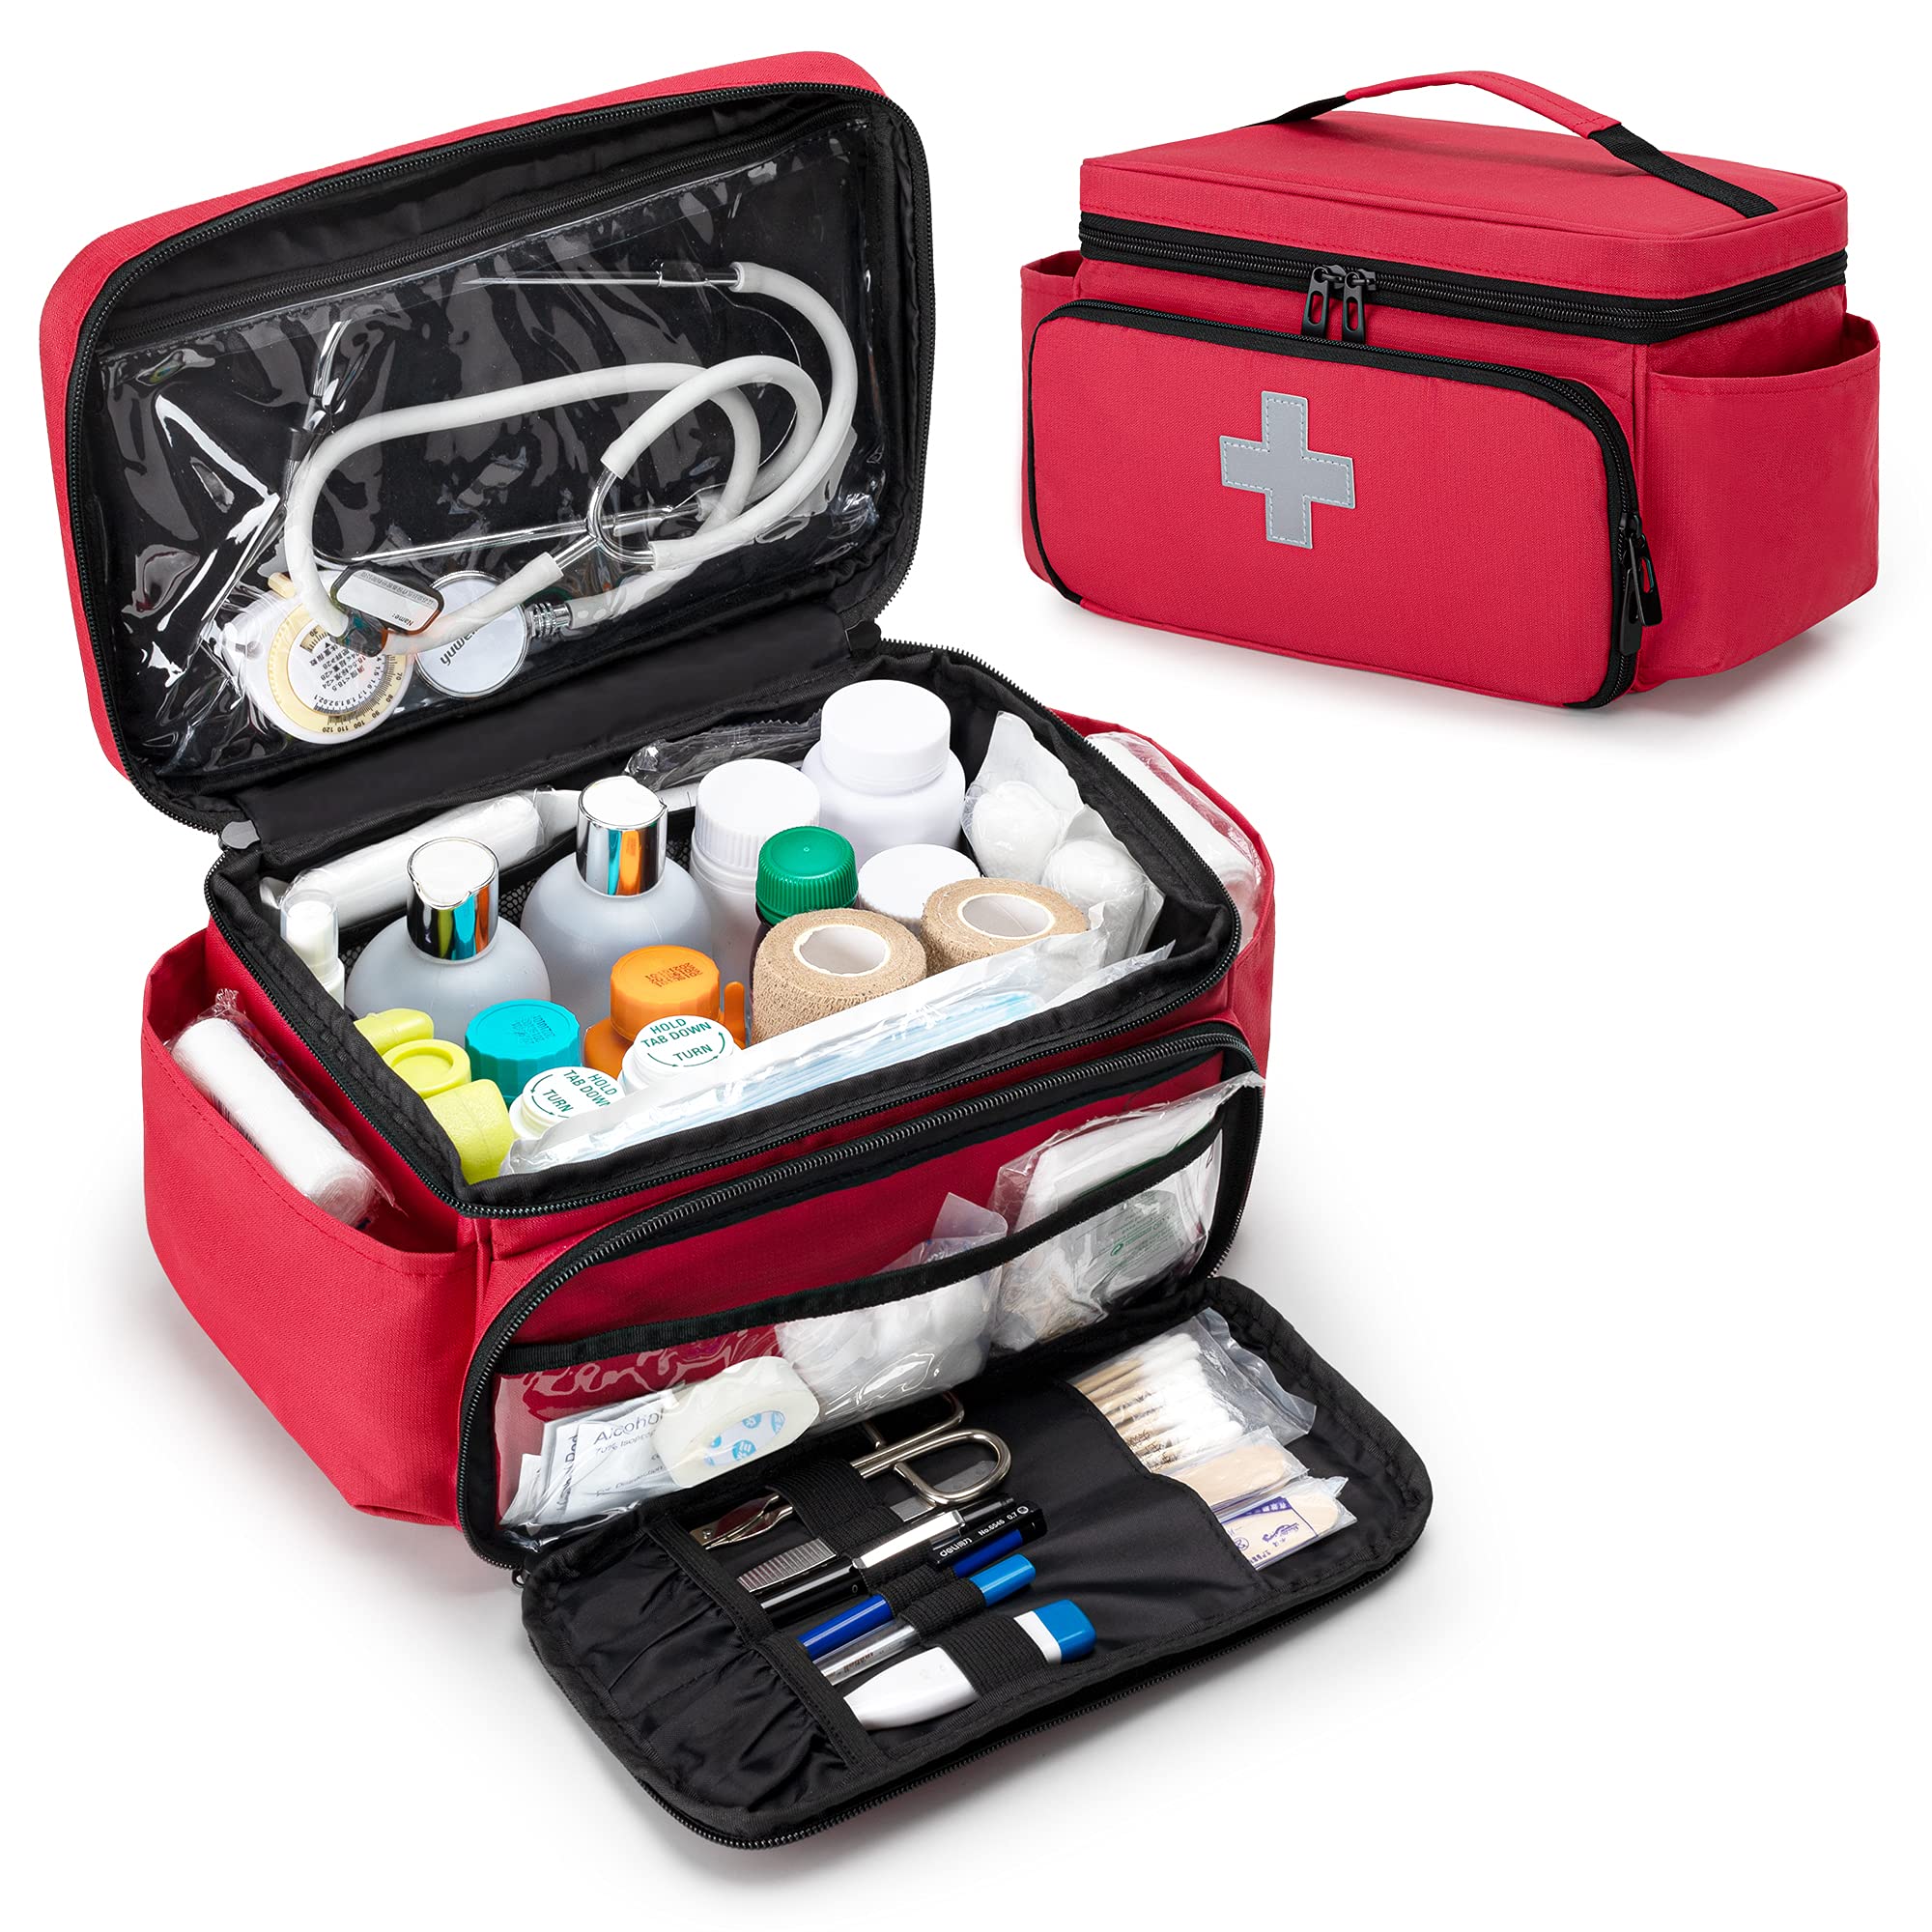 CURMIO Small Medicine Storage Bag Empty, Family First Aid Organizer Box for  Emergency Medical Kits, Red (